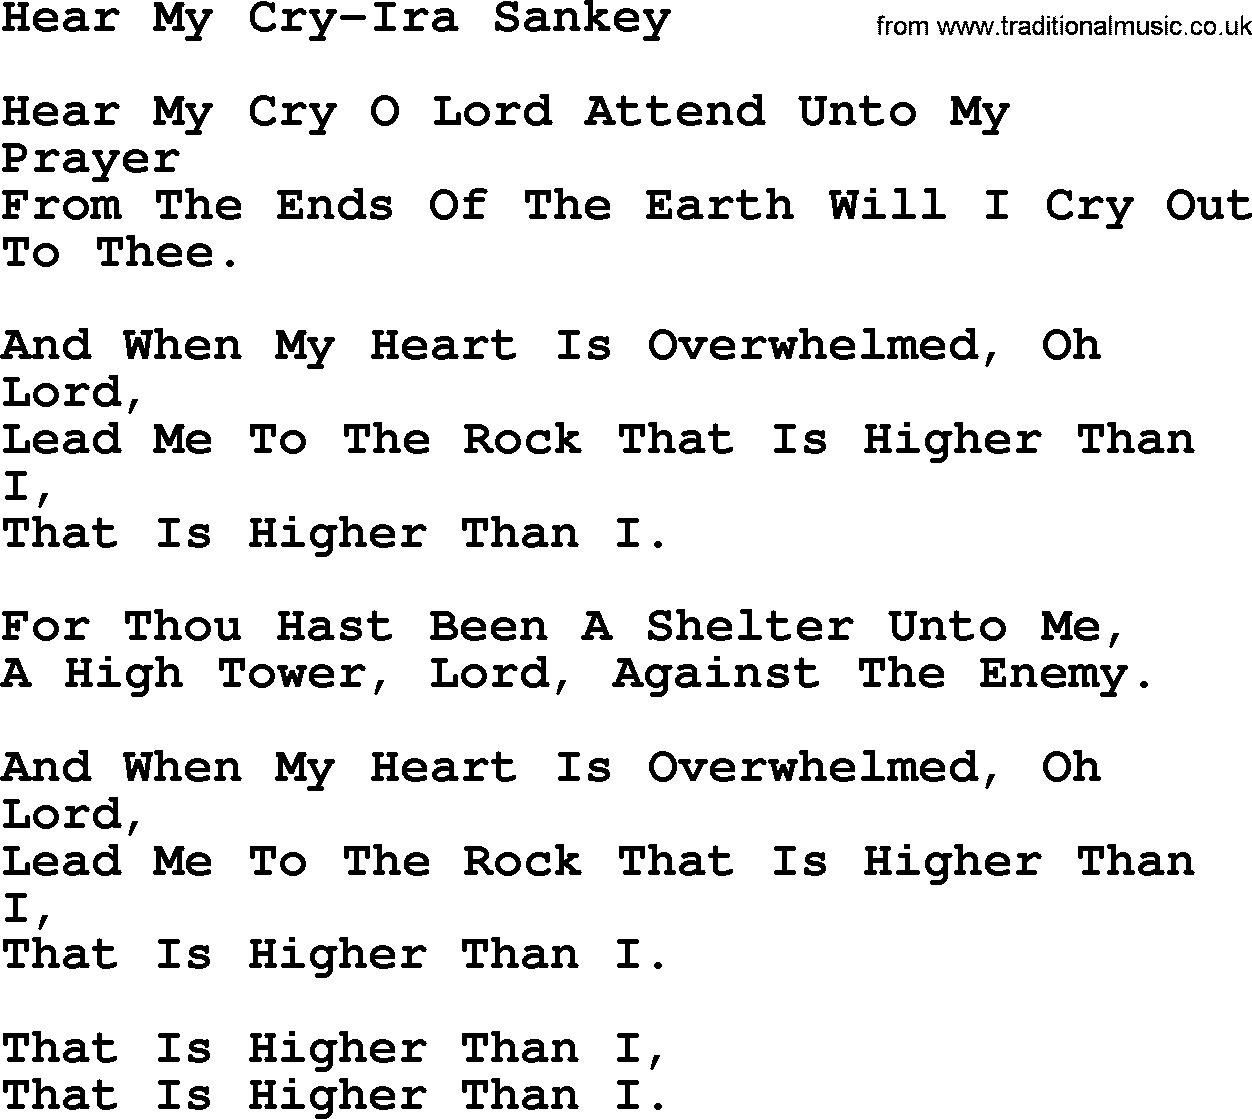 Ira Sankey hymn: Hear My Cry-Ira Sankey, lyrics